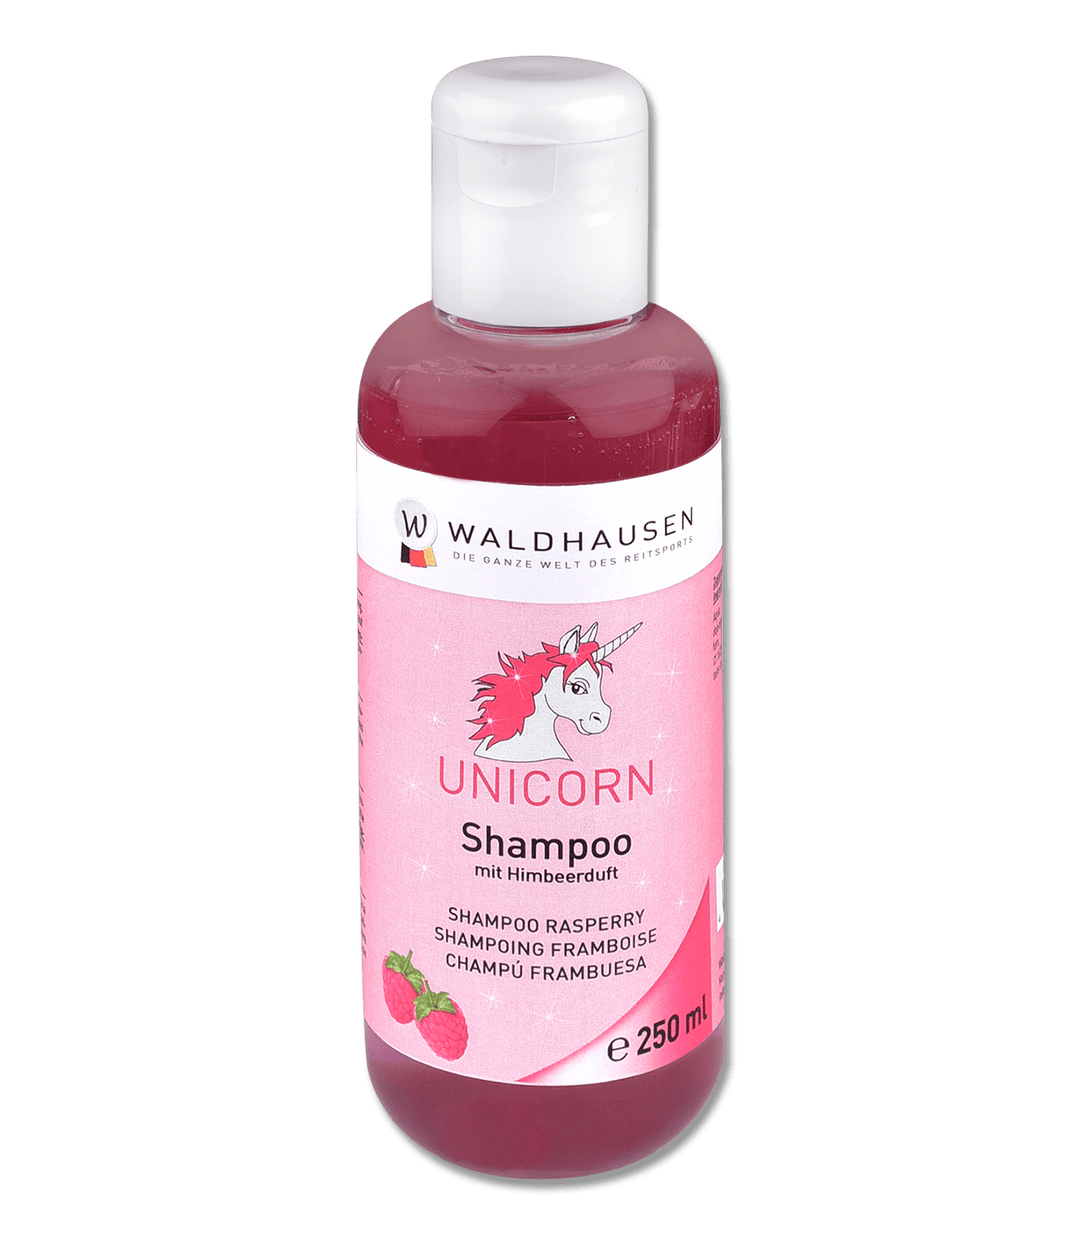 Waldhausen Unicorn shampoo